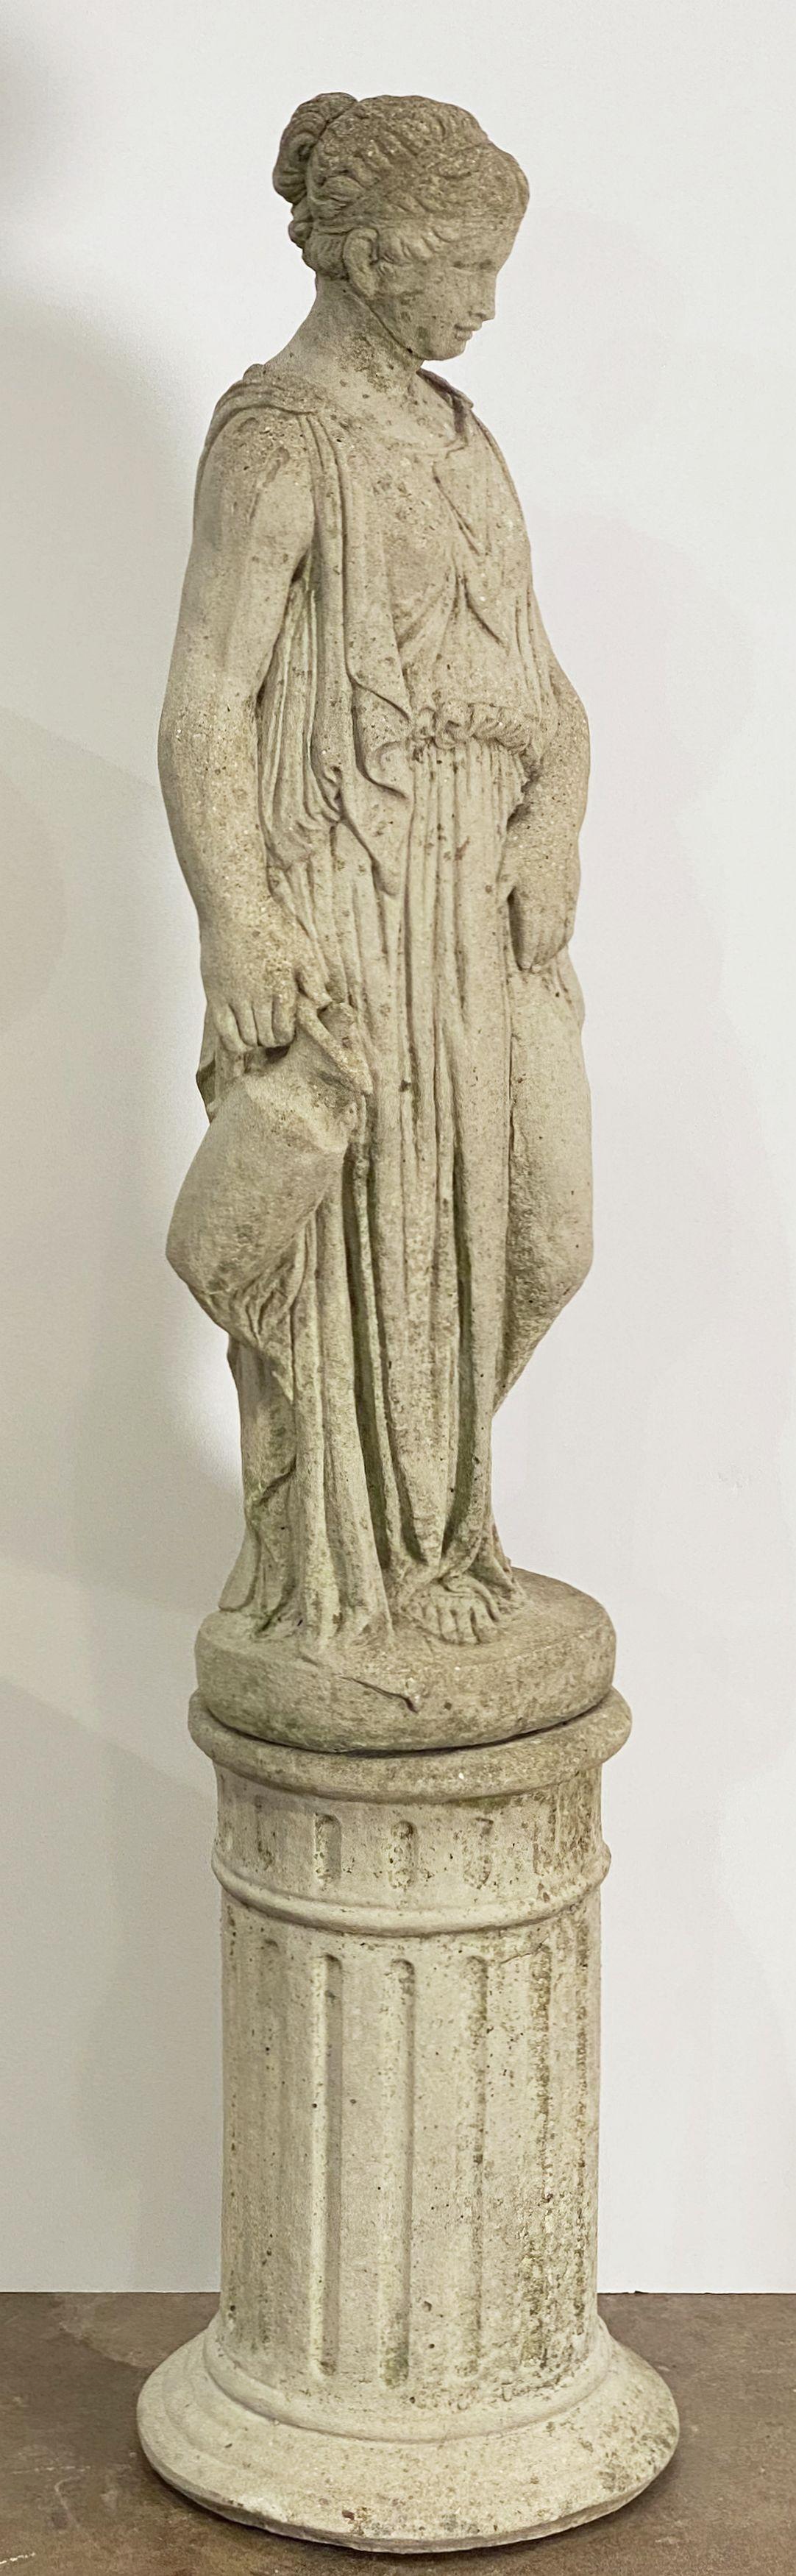 Large English Garden Stone Statue of a Maiden on Column Pedestal (H 59 1/4) 3